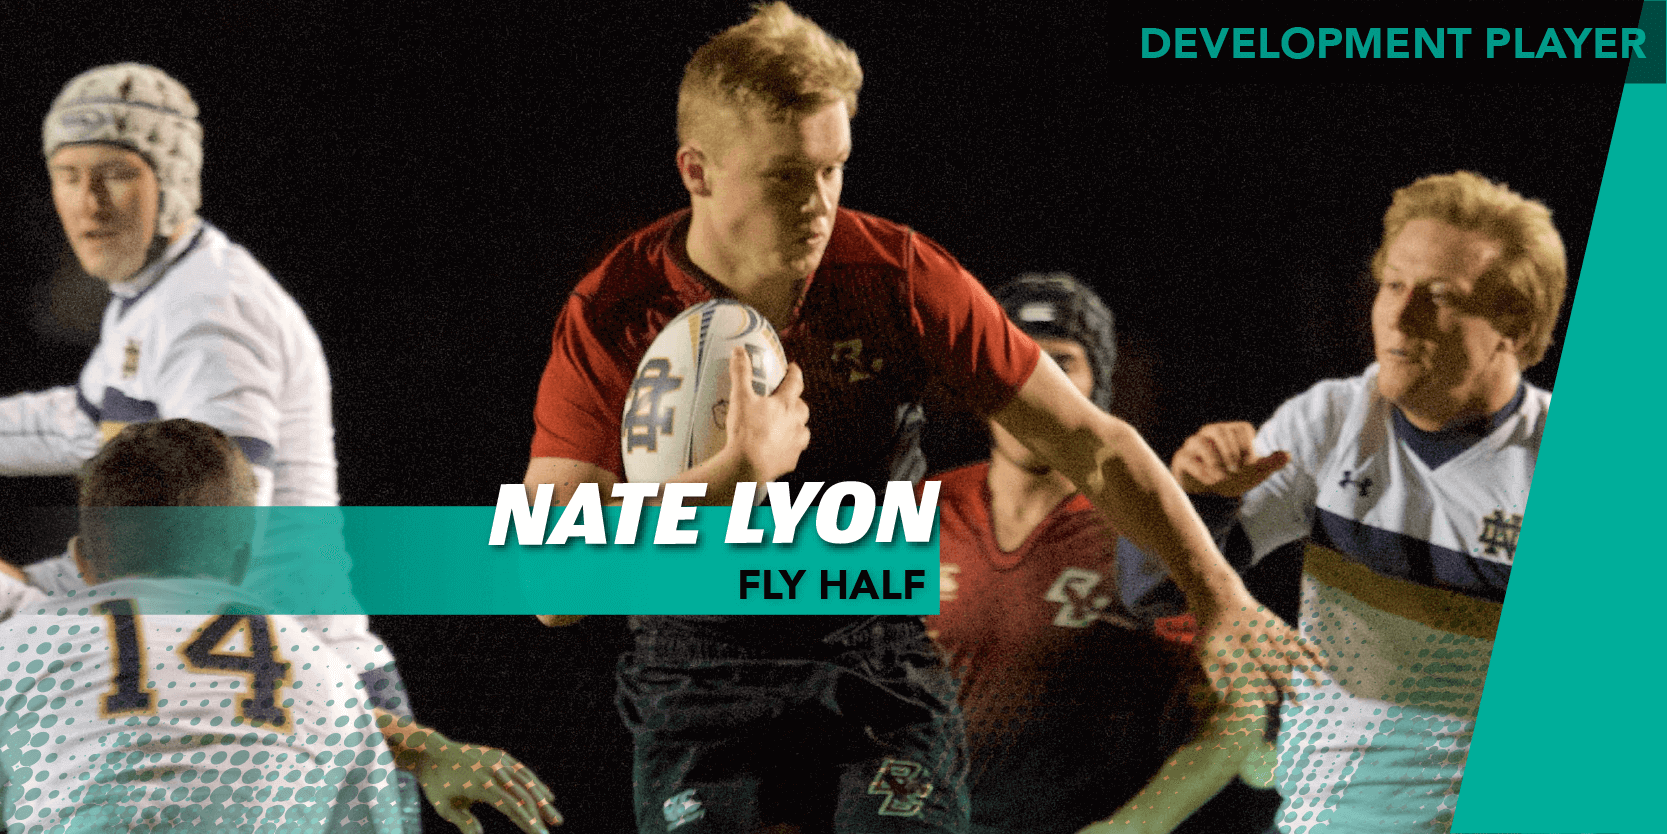 Nate Lyon Returns as Development Player